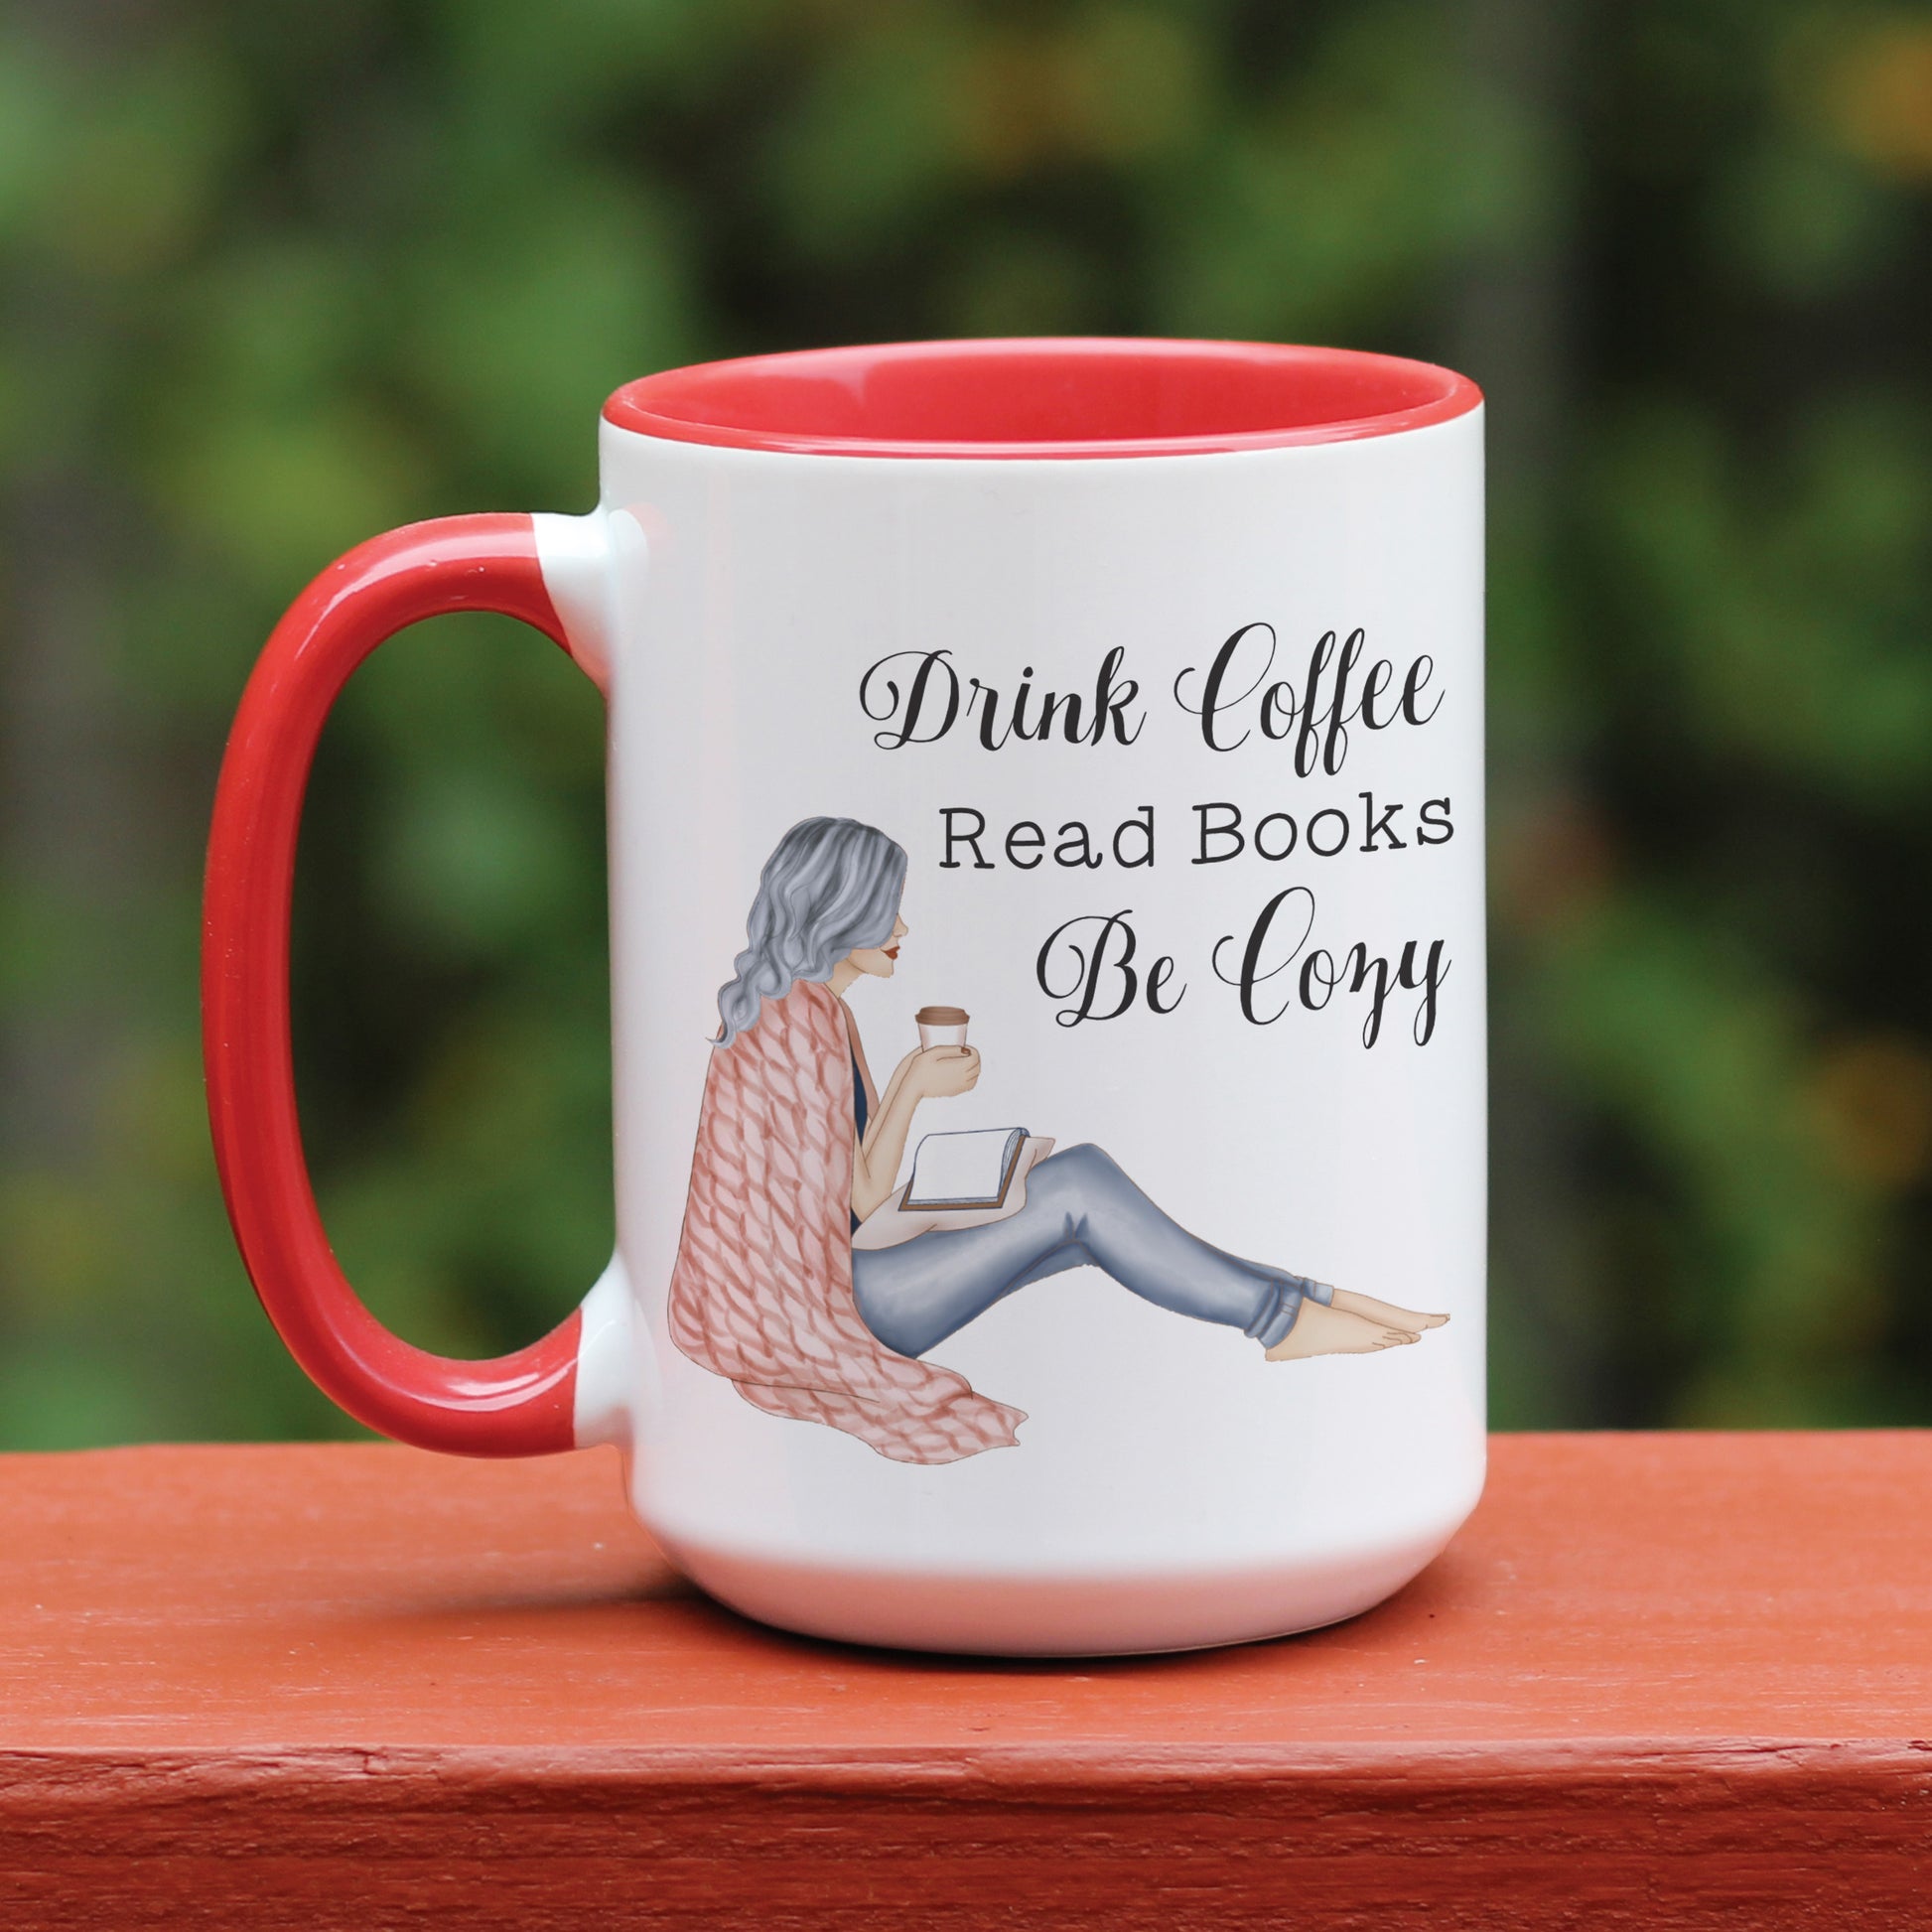 Drink Coffee Read Books Be Cozy Red Coffee mug